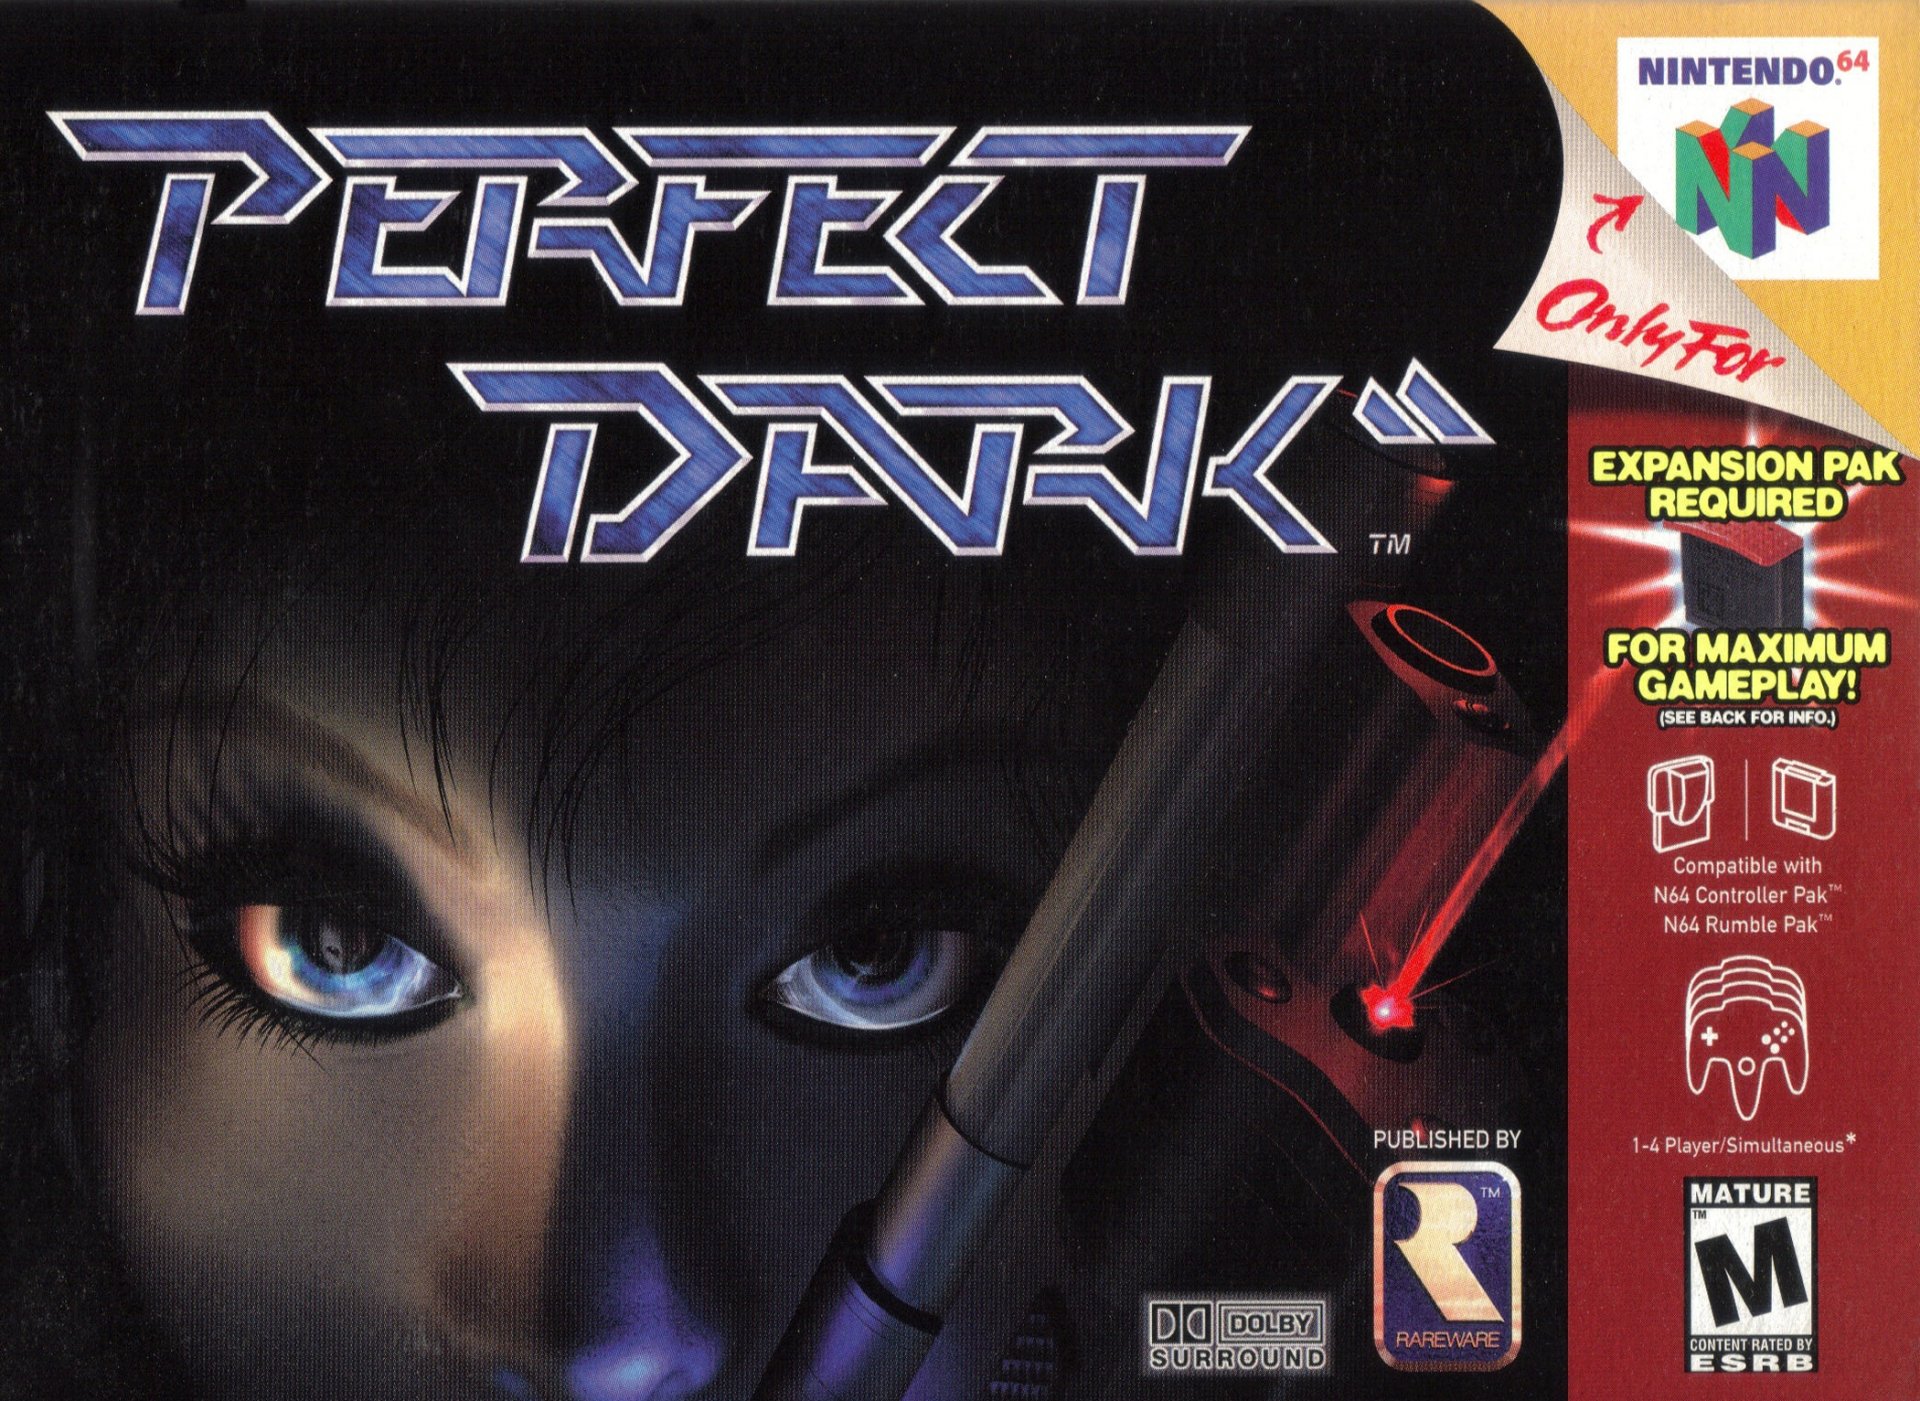 download perfect dark video game